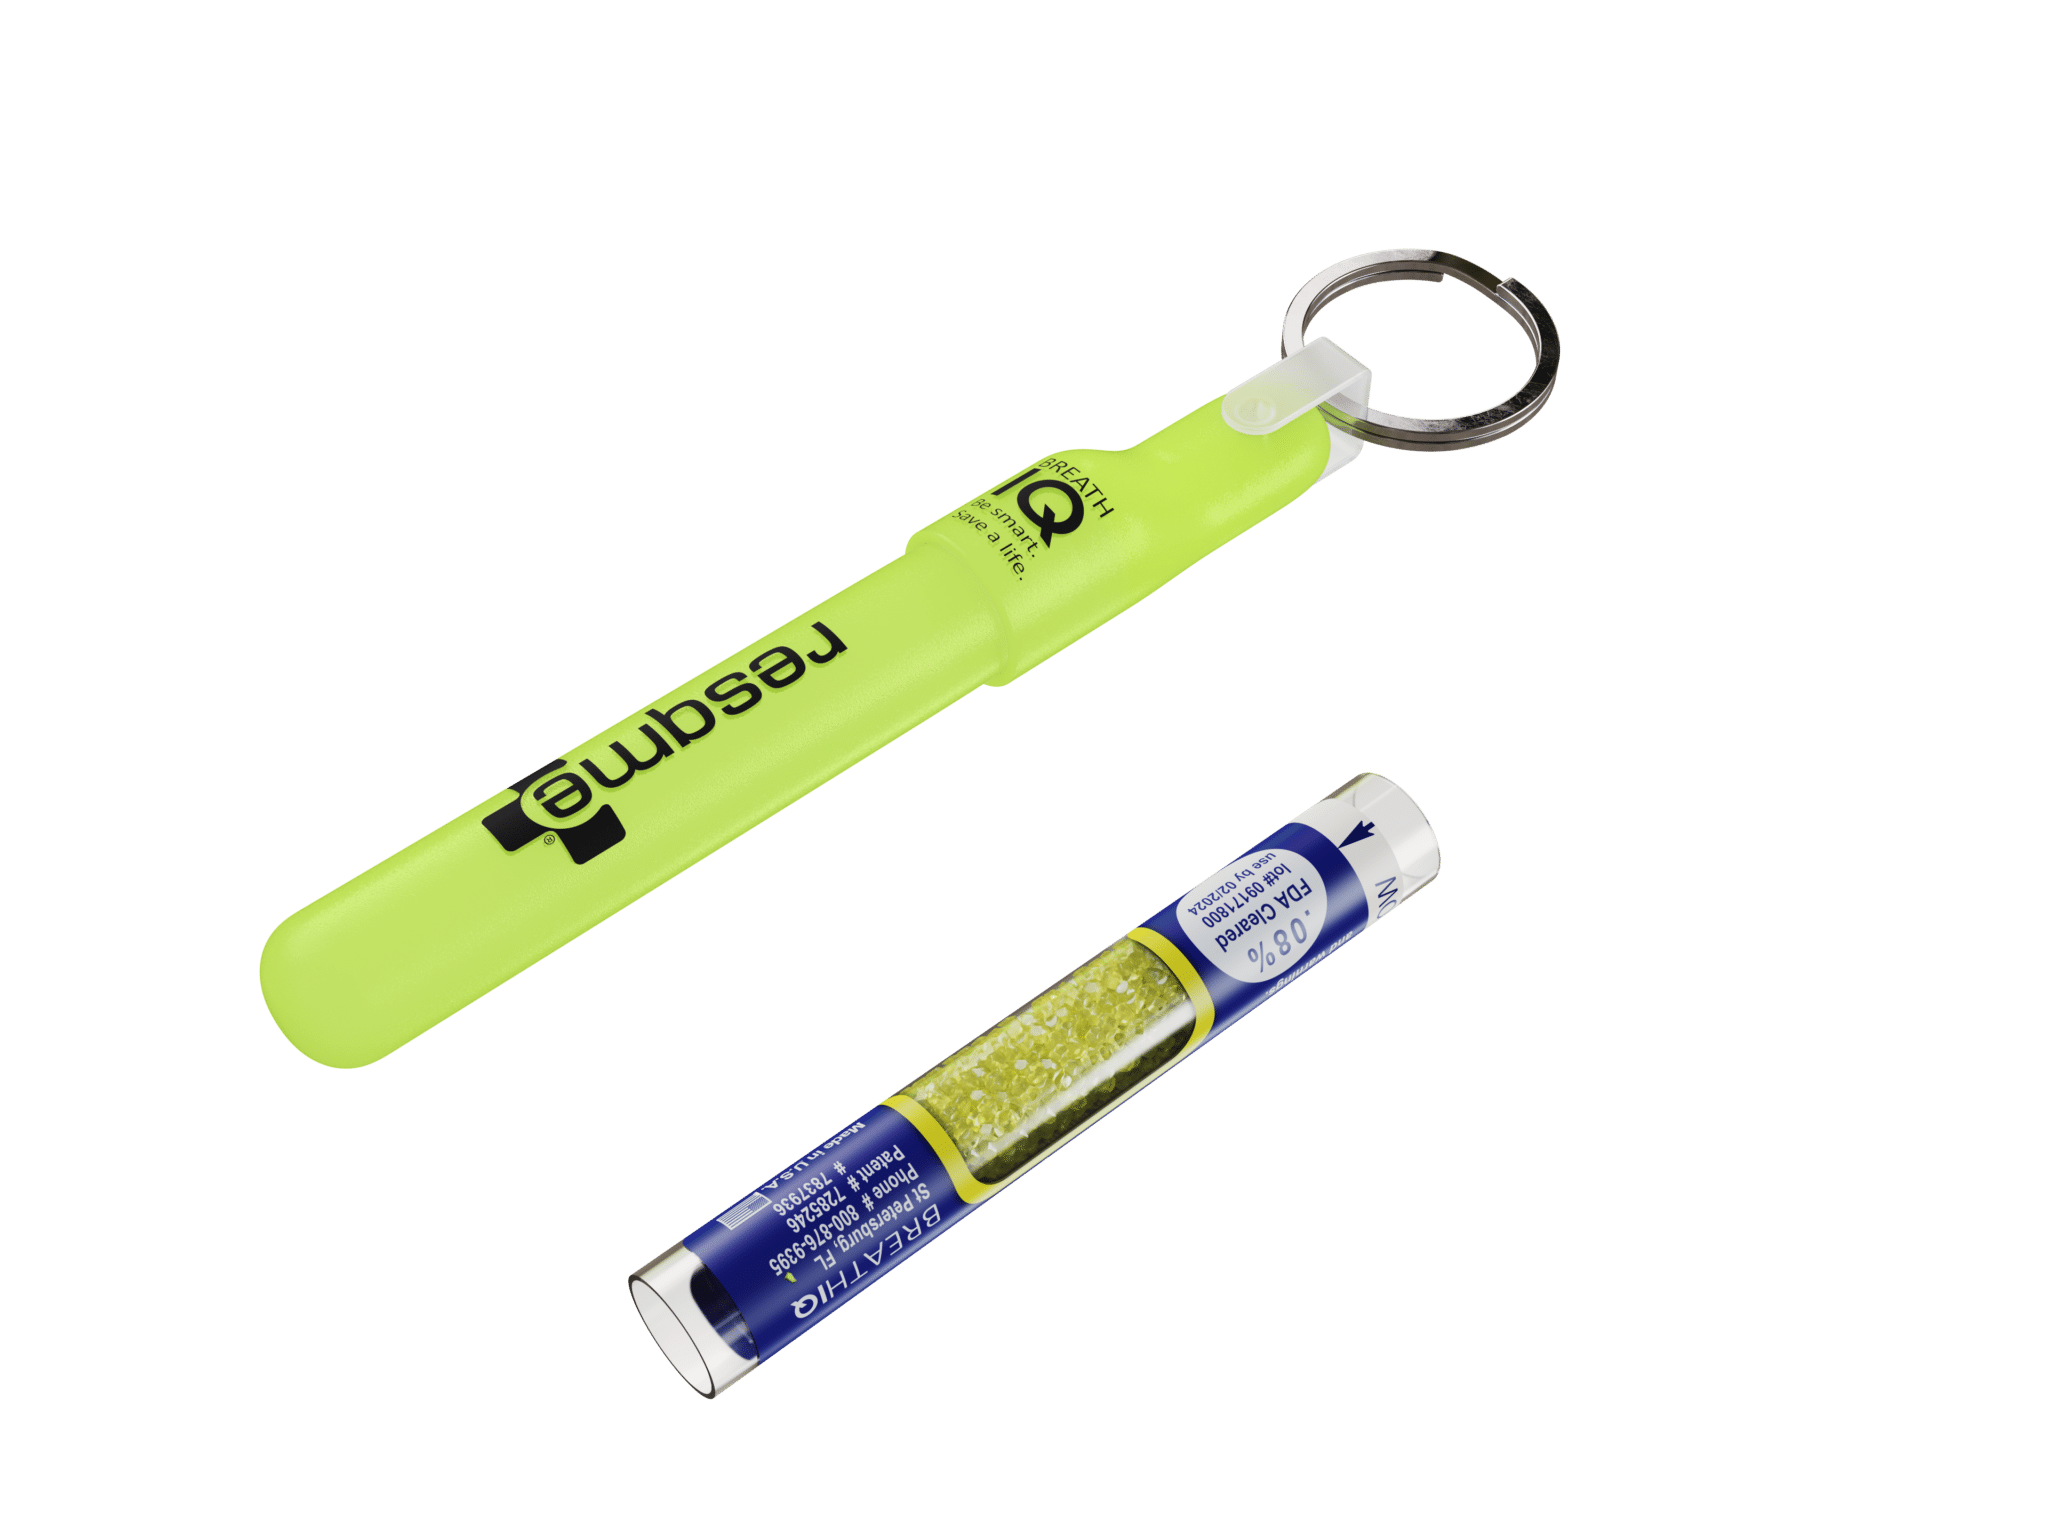 resqme® Breath IQ breathalyzer, glow in the dark key chain